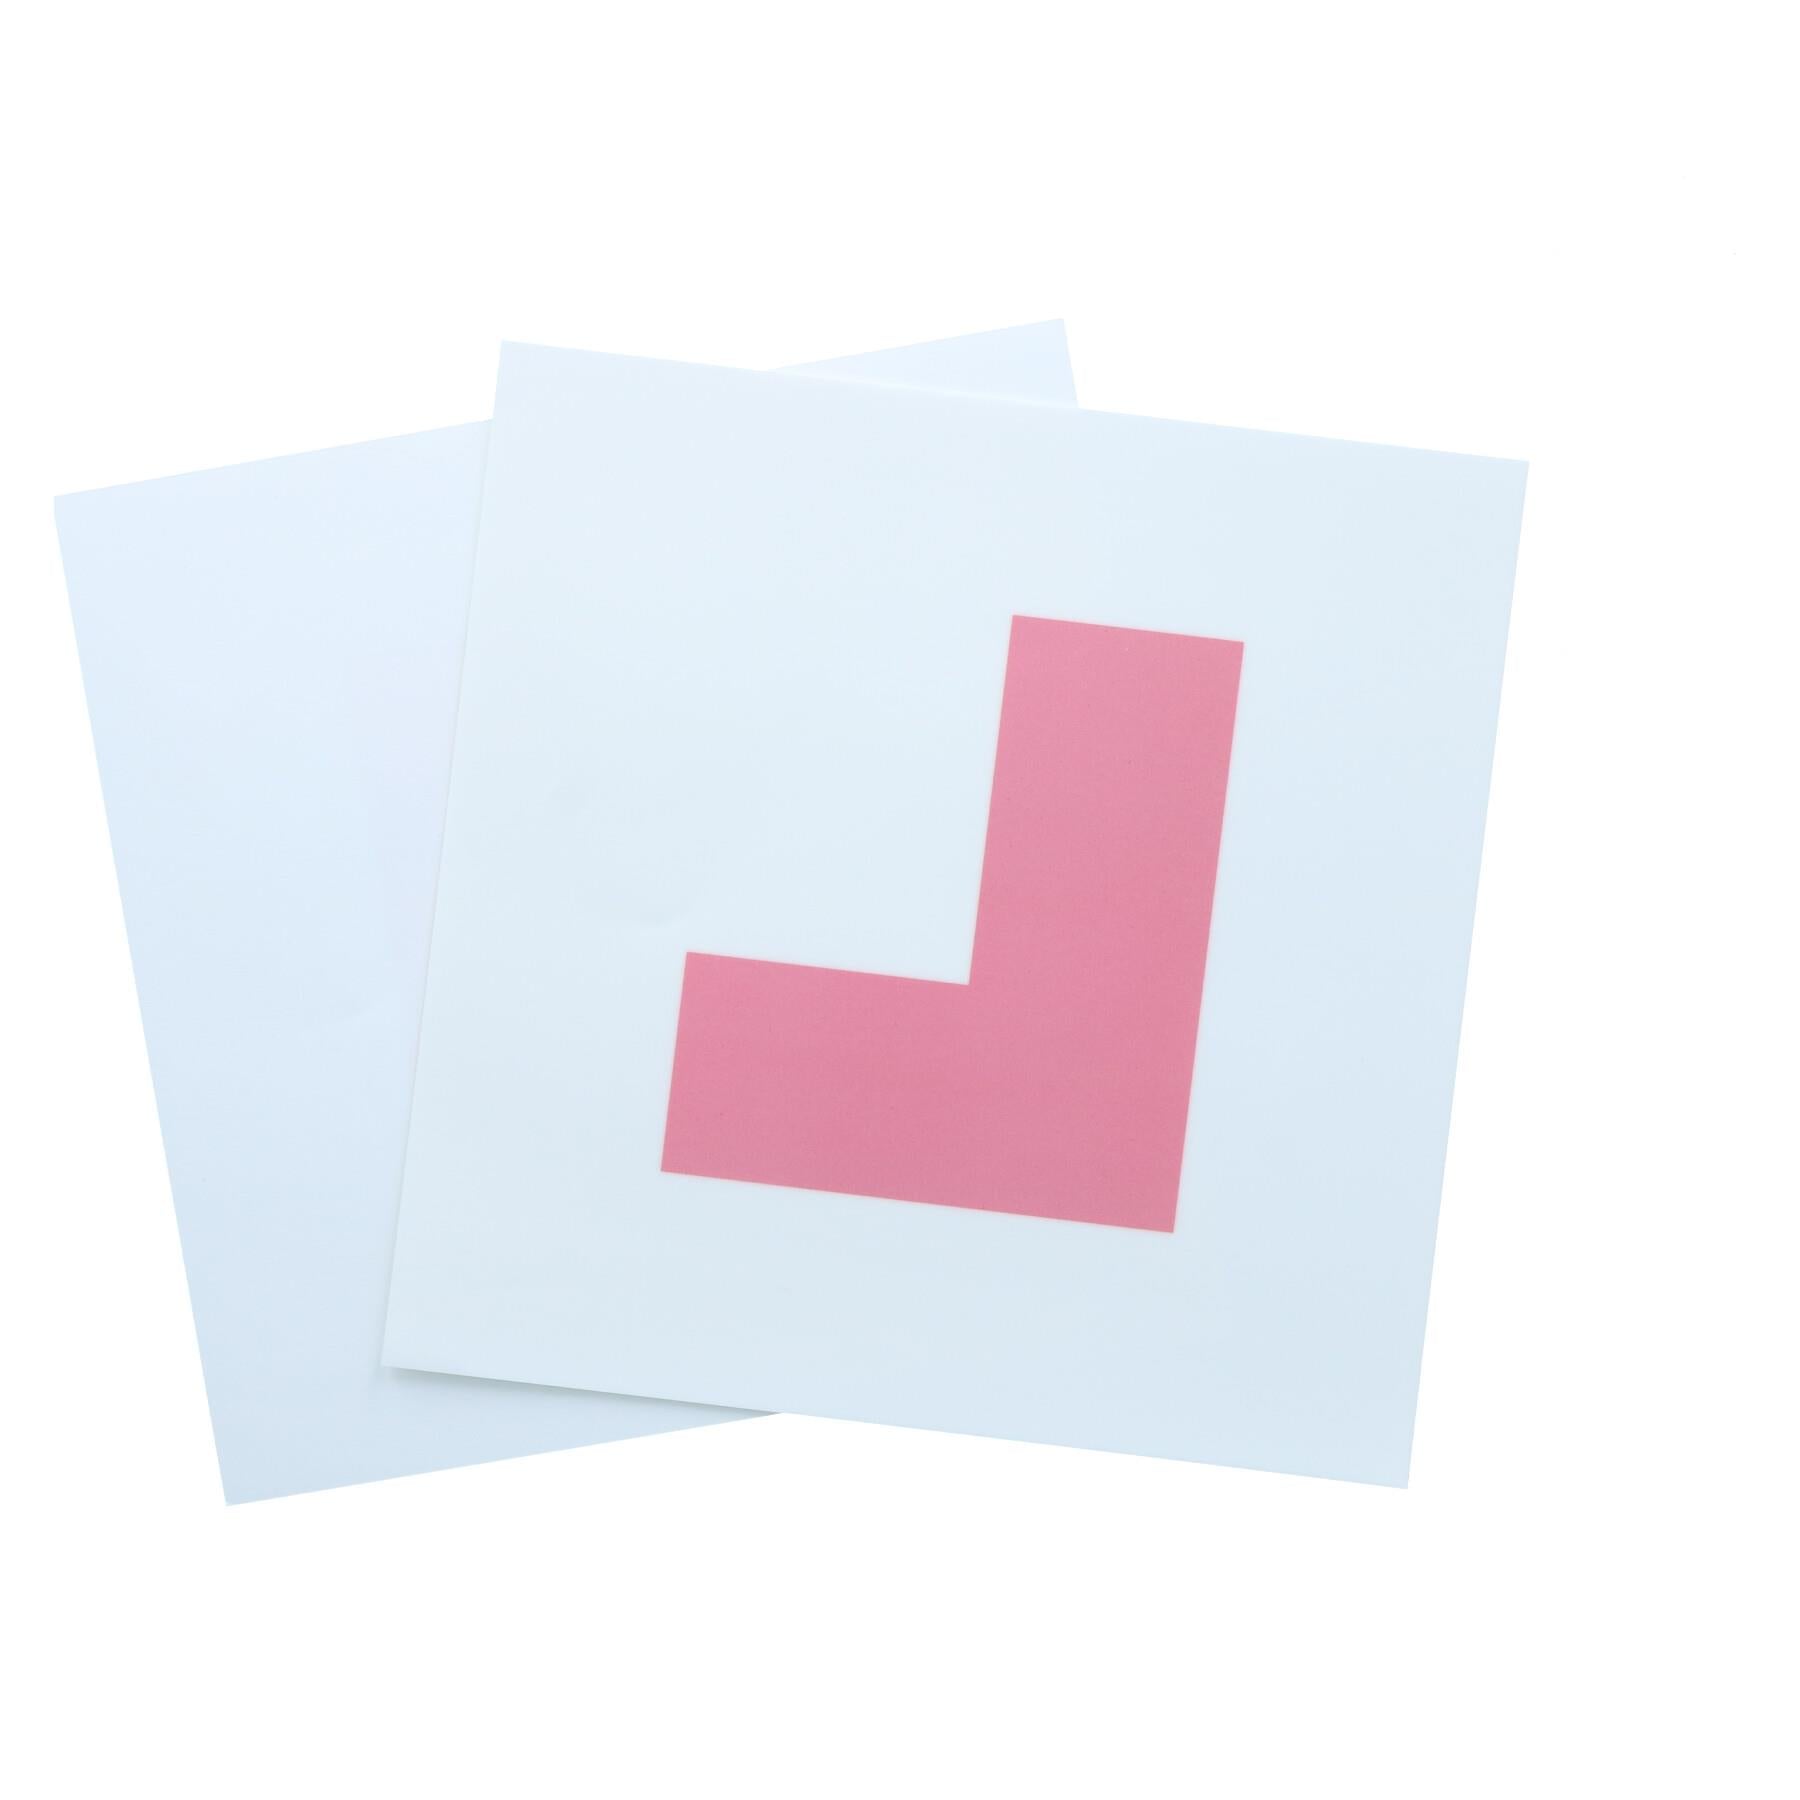 2 x Window Cling L Plates Learner Driver Car Badge Road Legal